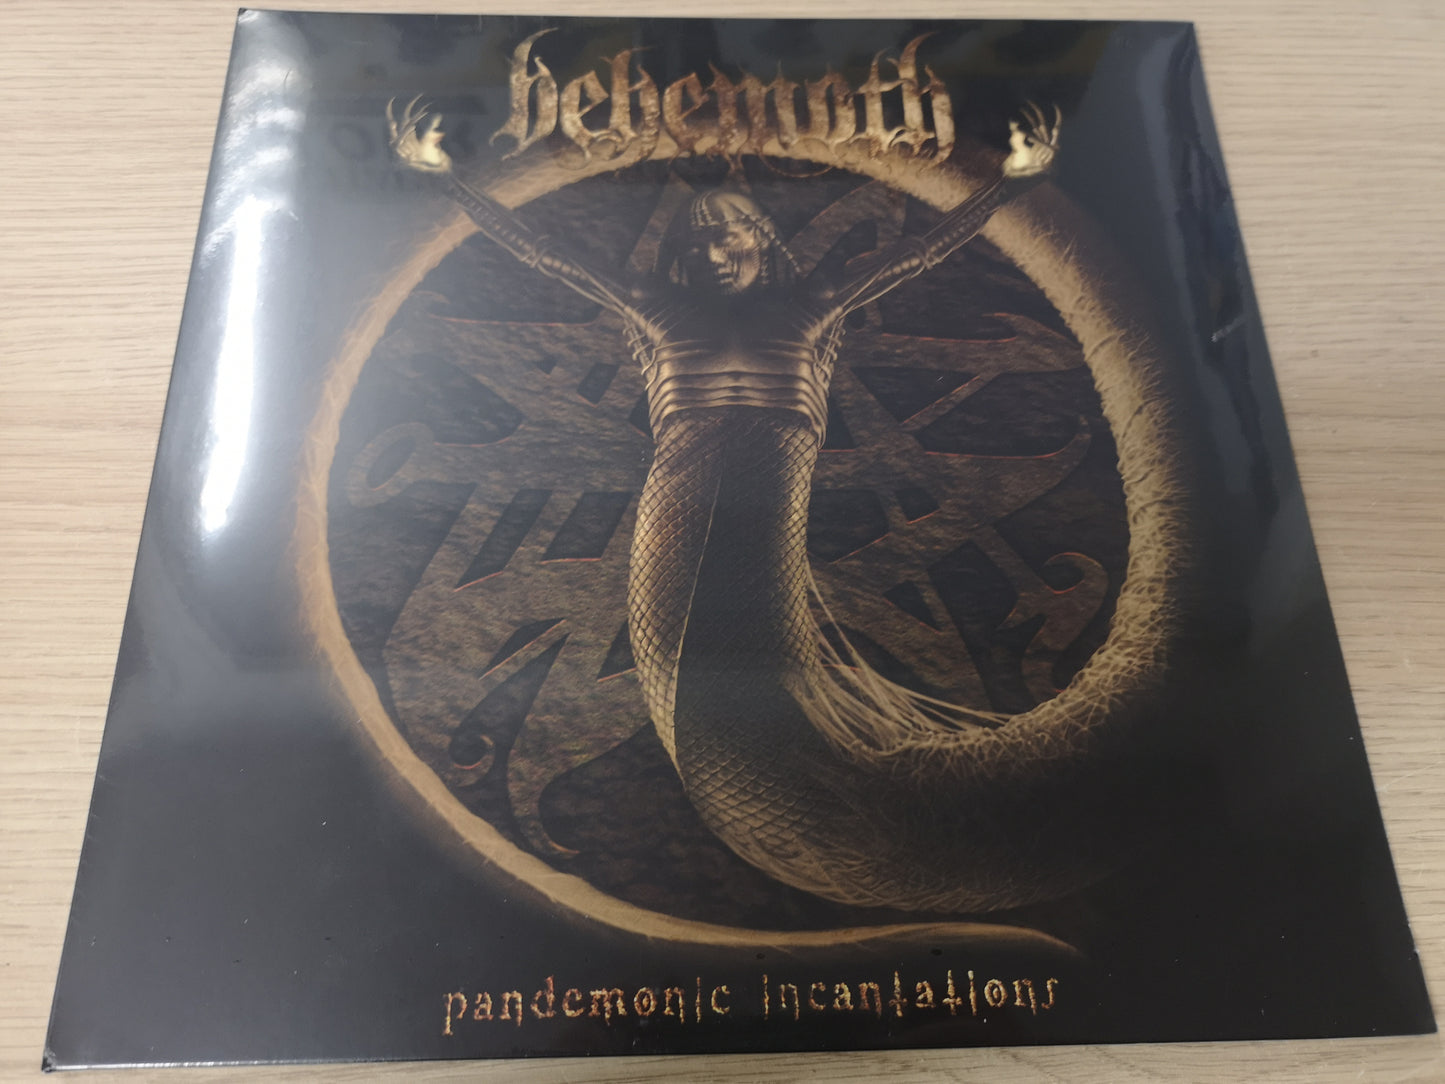 Behemoth "Pandemonic Incantations" Sealed / NEW Re